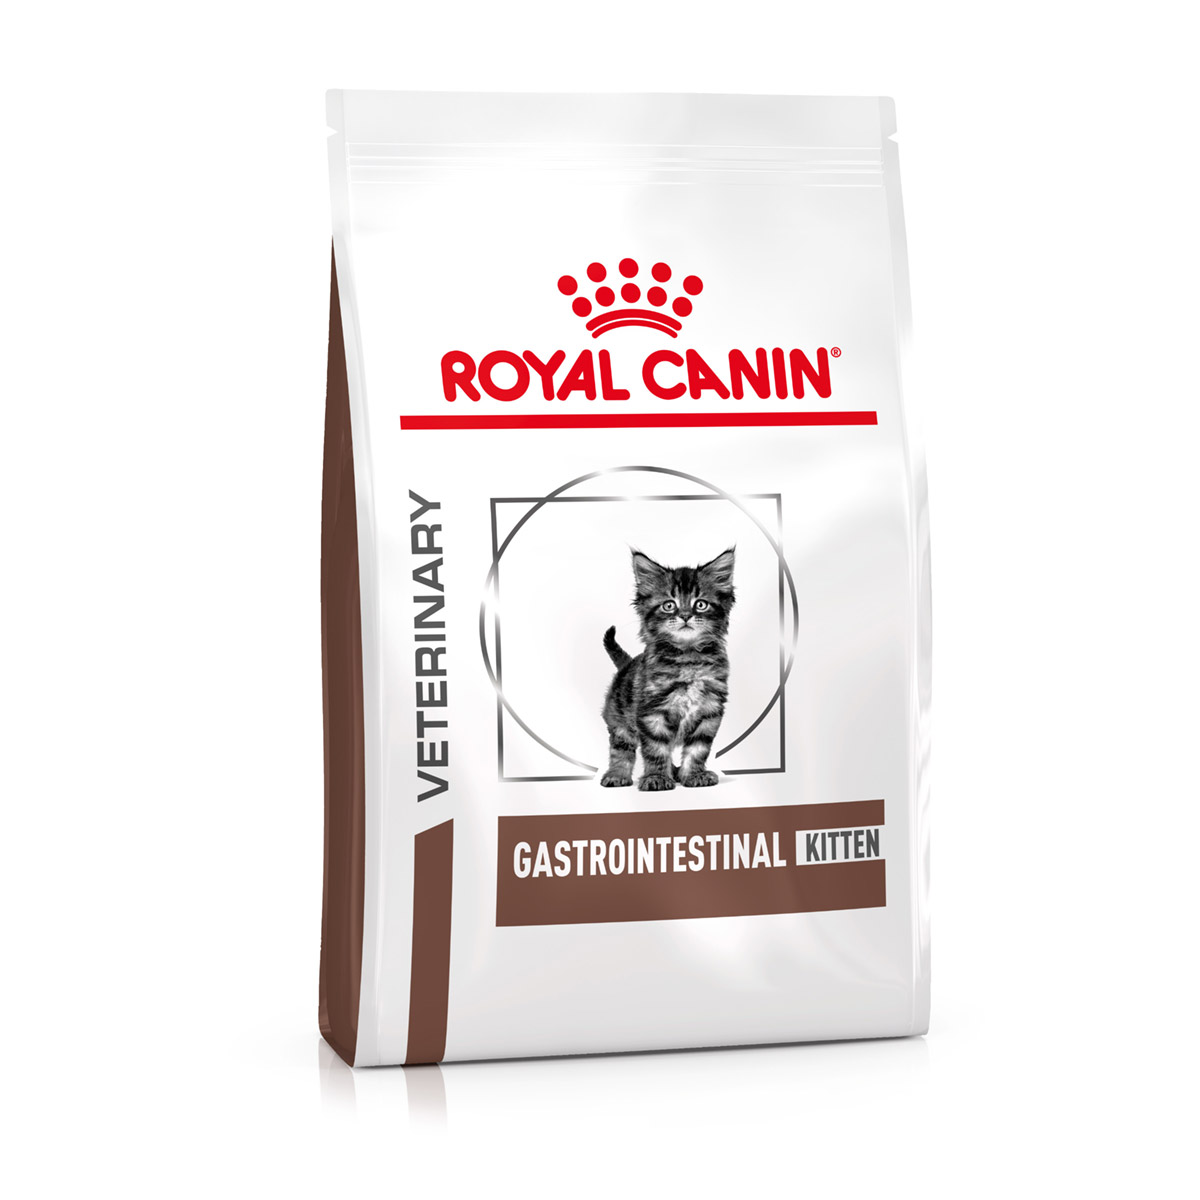 ROYAL CANIN® Veterinary GASTROINTESTINAL KITTEN Trockenfutter für Katzenwelpen 2kg von Royal Canin